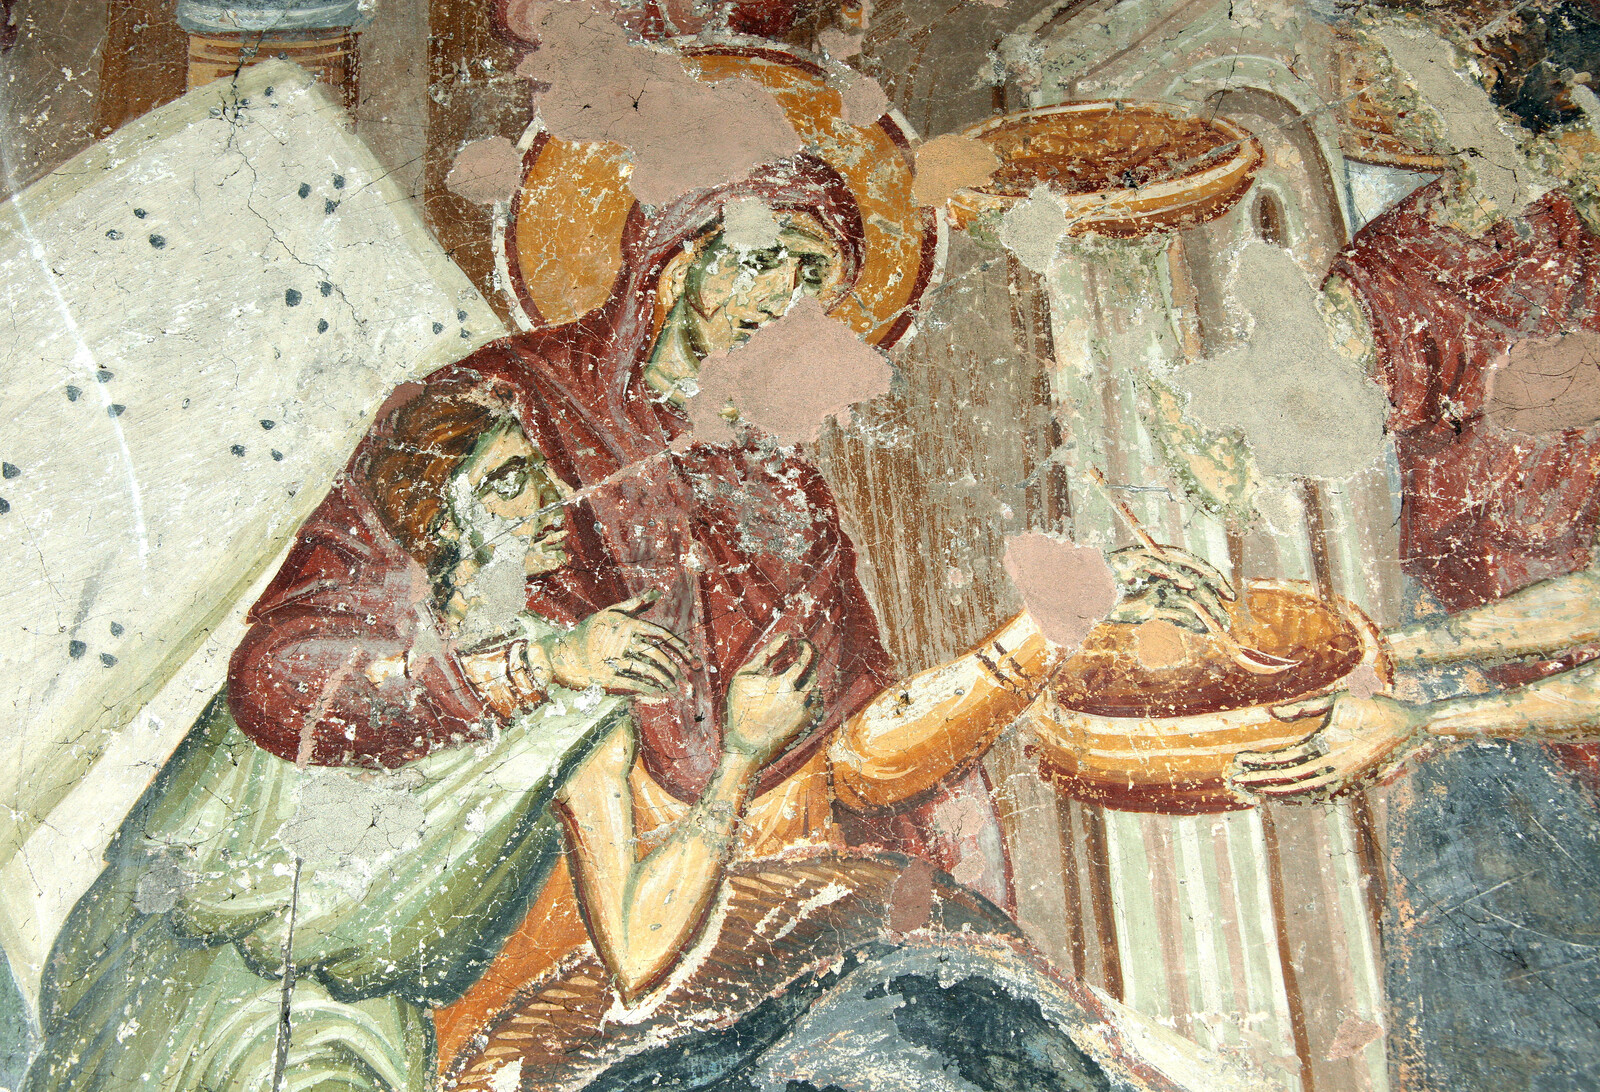 Birth of the Virgin, detail